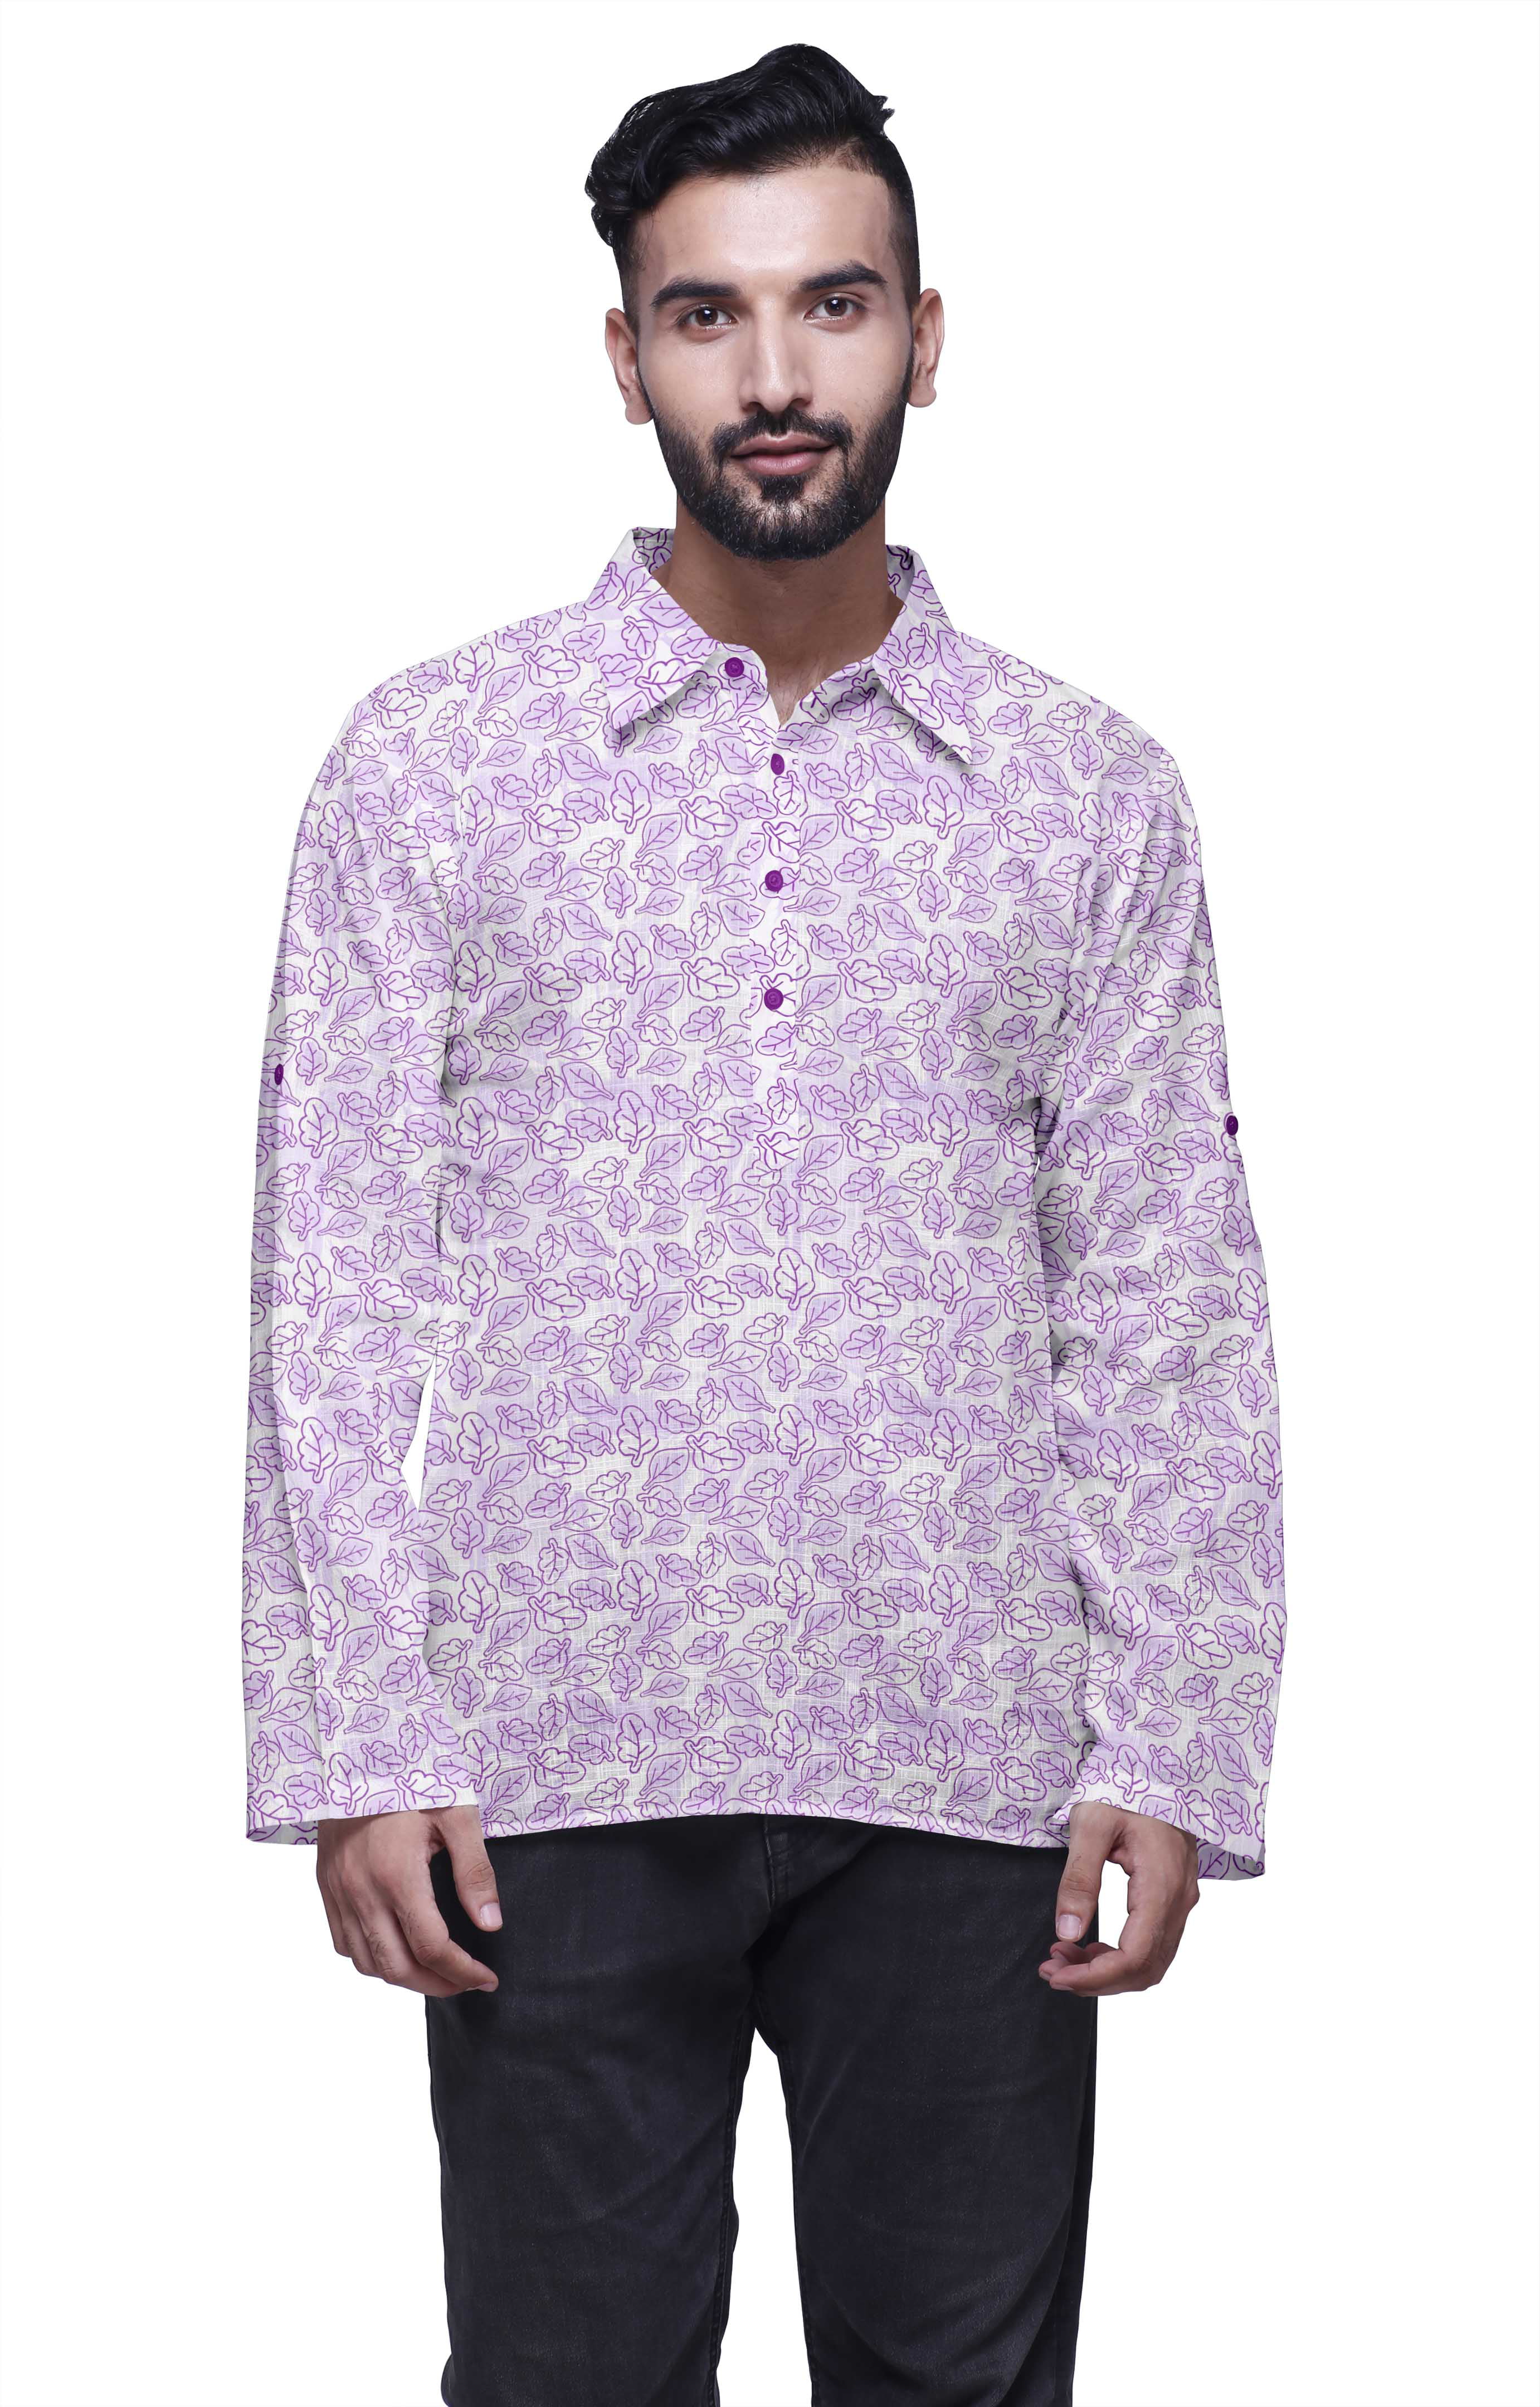 Details about   Indian Kurta New Fabric Homewear Fashion Shirt Men's Cotton Clothing 